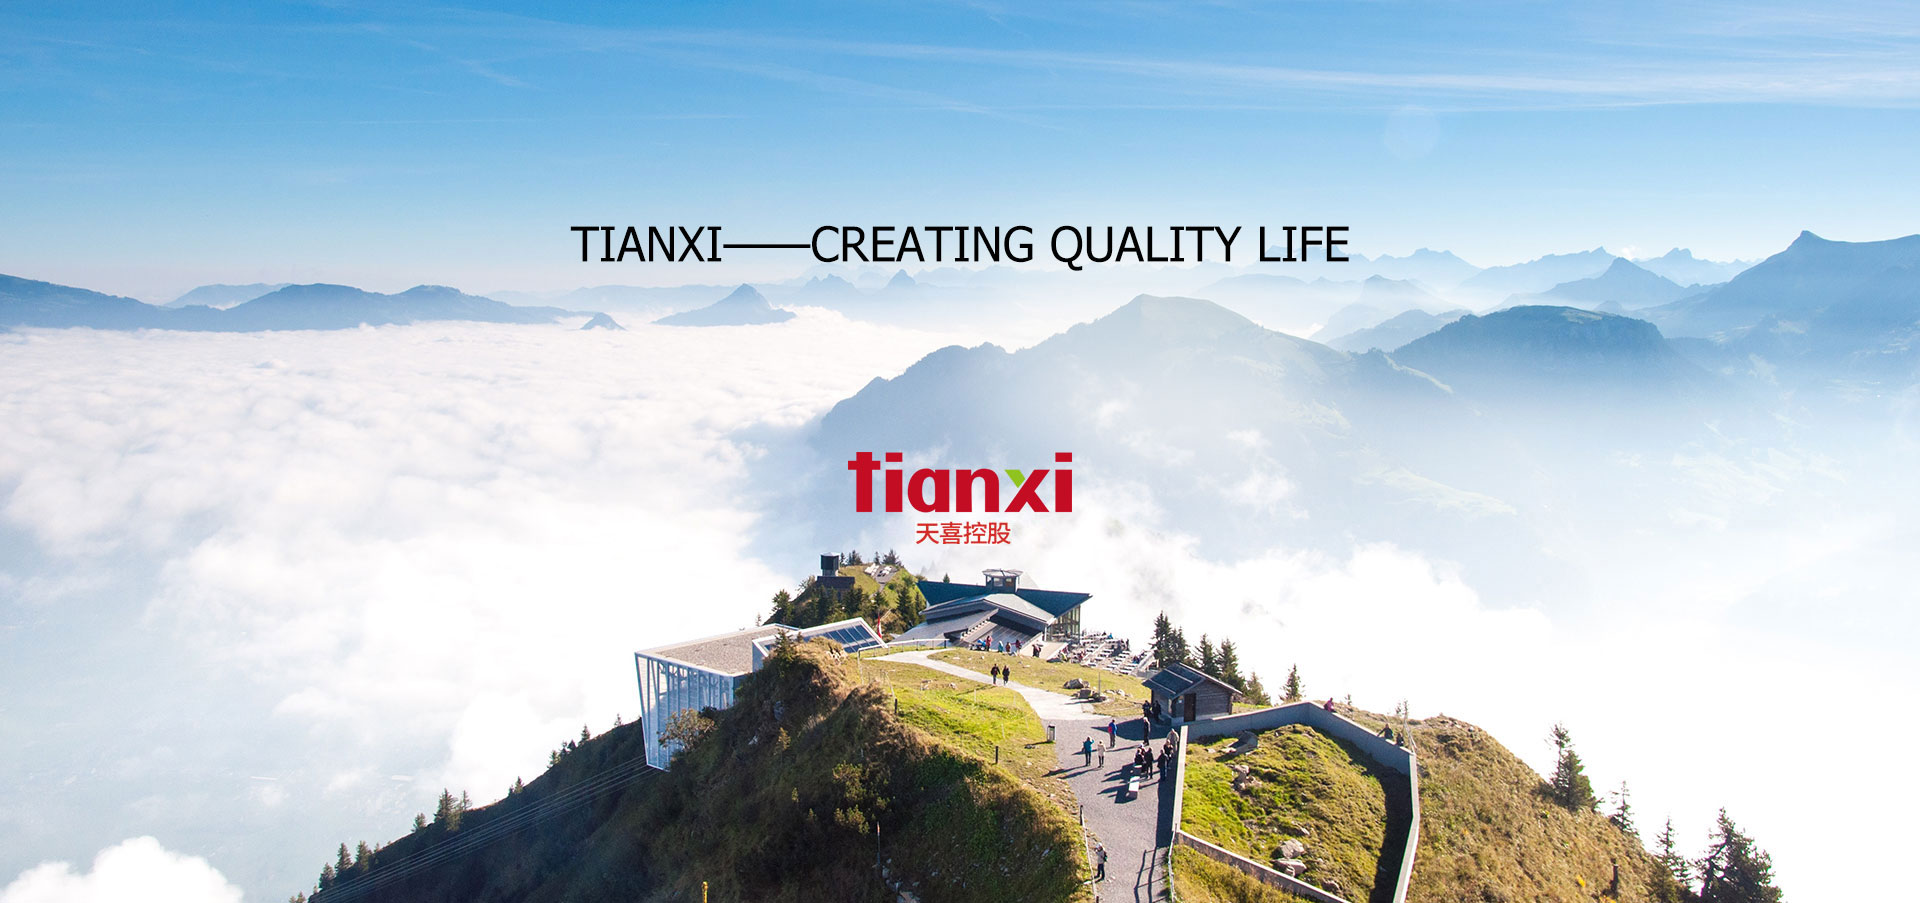 Tianxi - Creating Quality Life